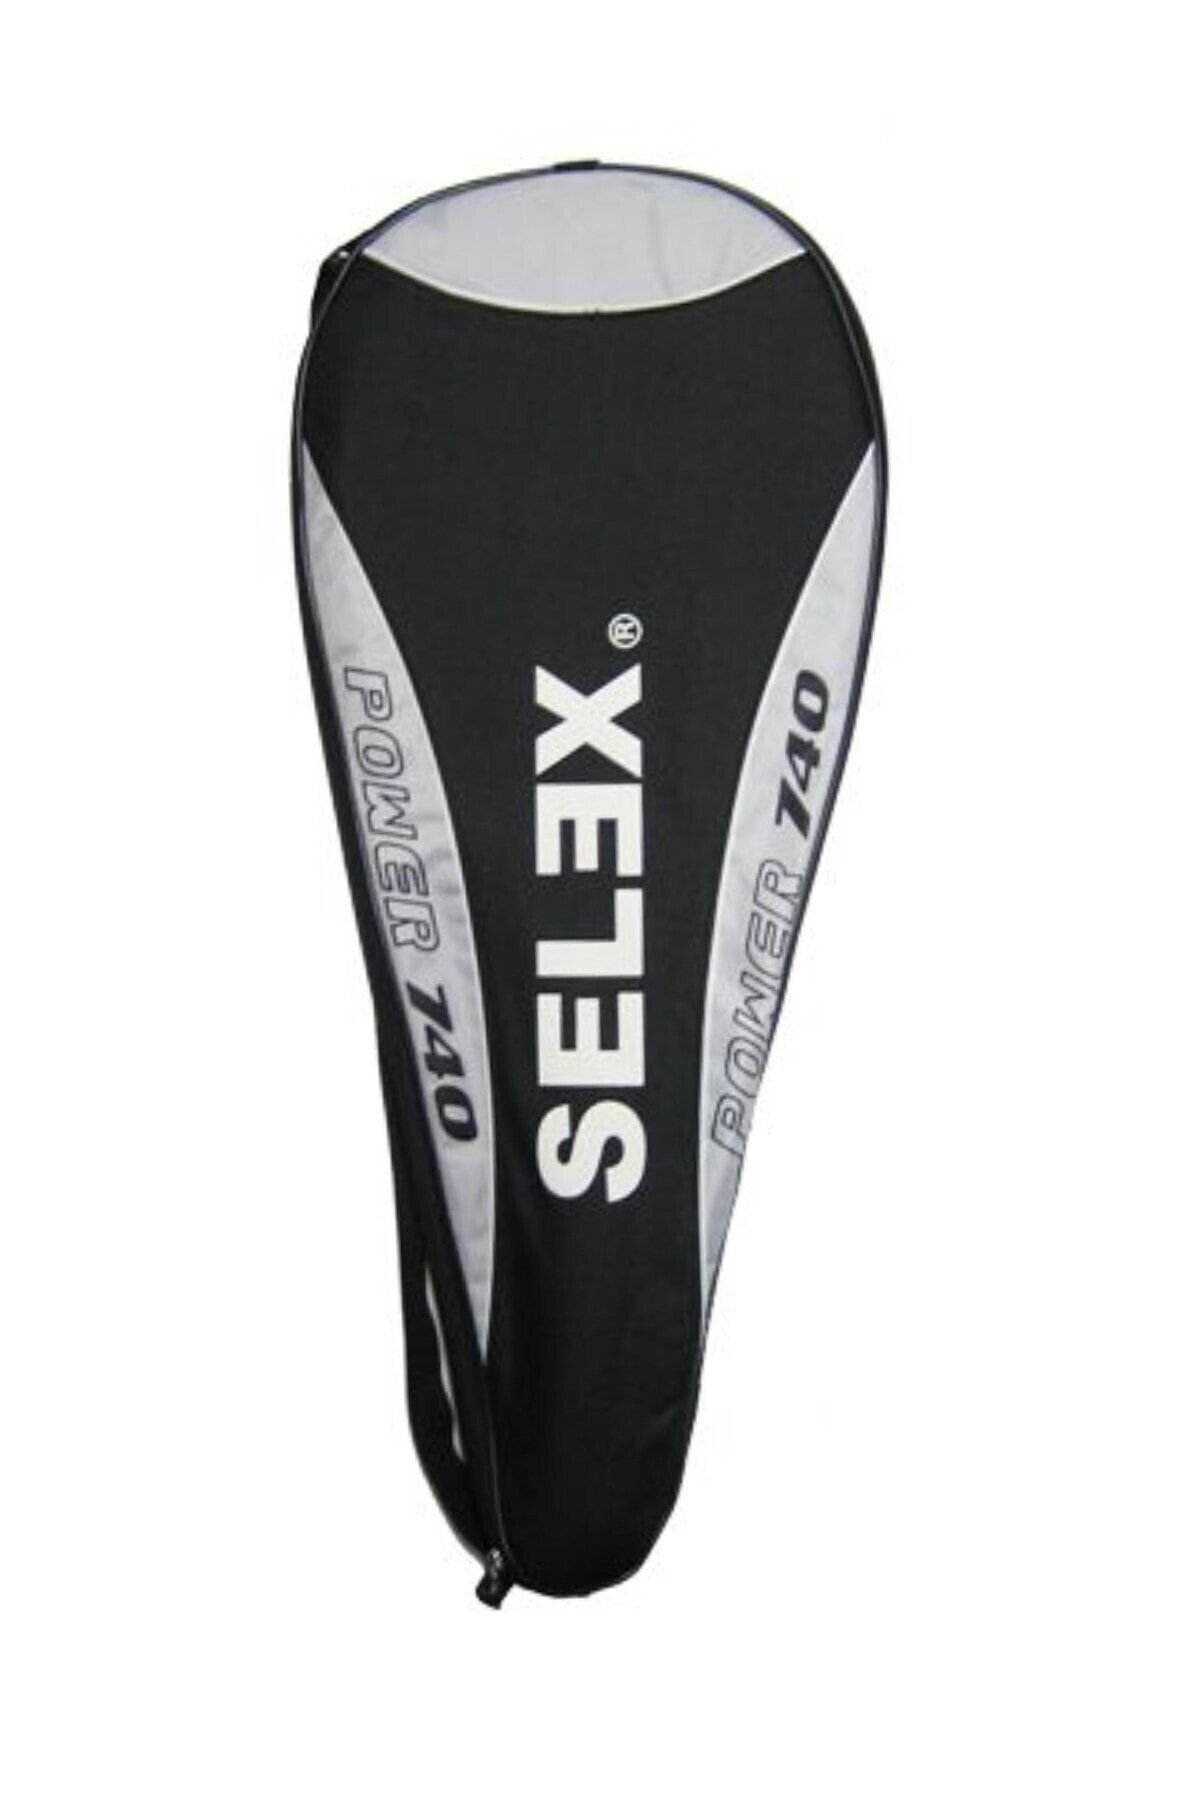 SELEX Tr-slx-062 Power 740 27" L3 Unisex Tenis Raketi